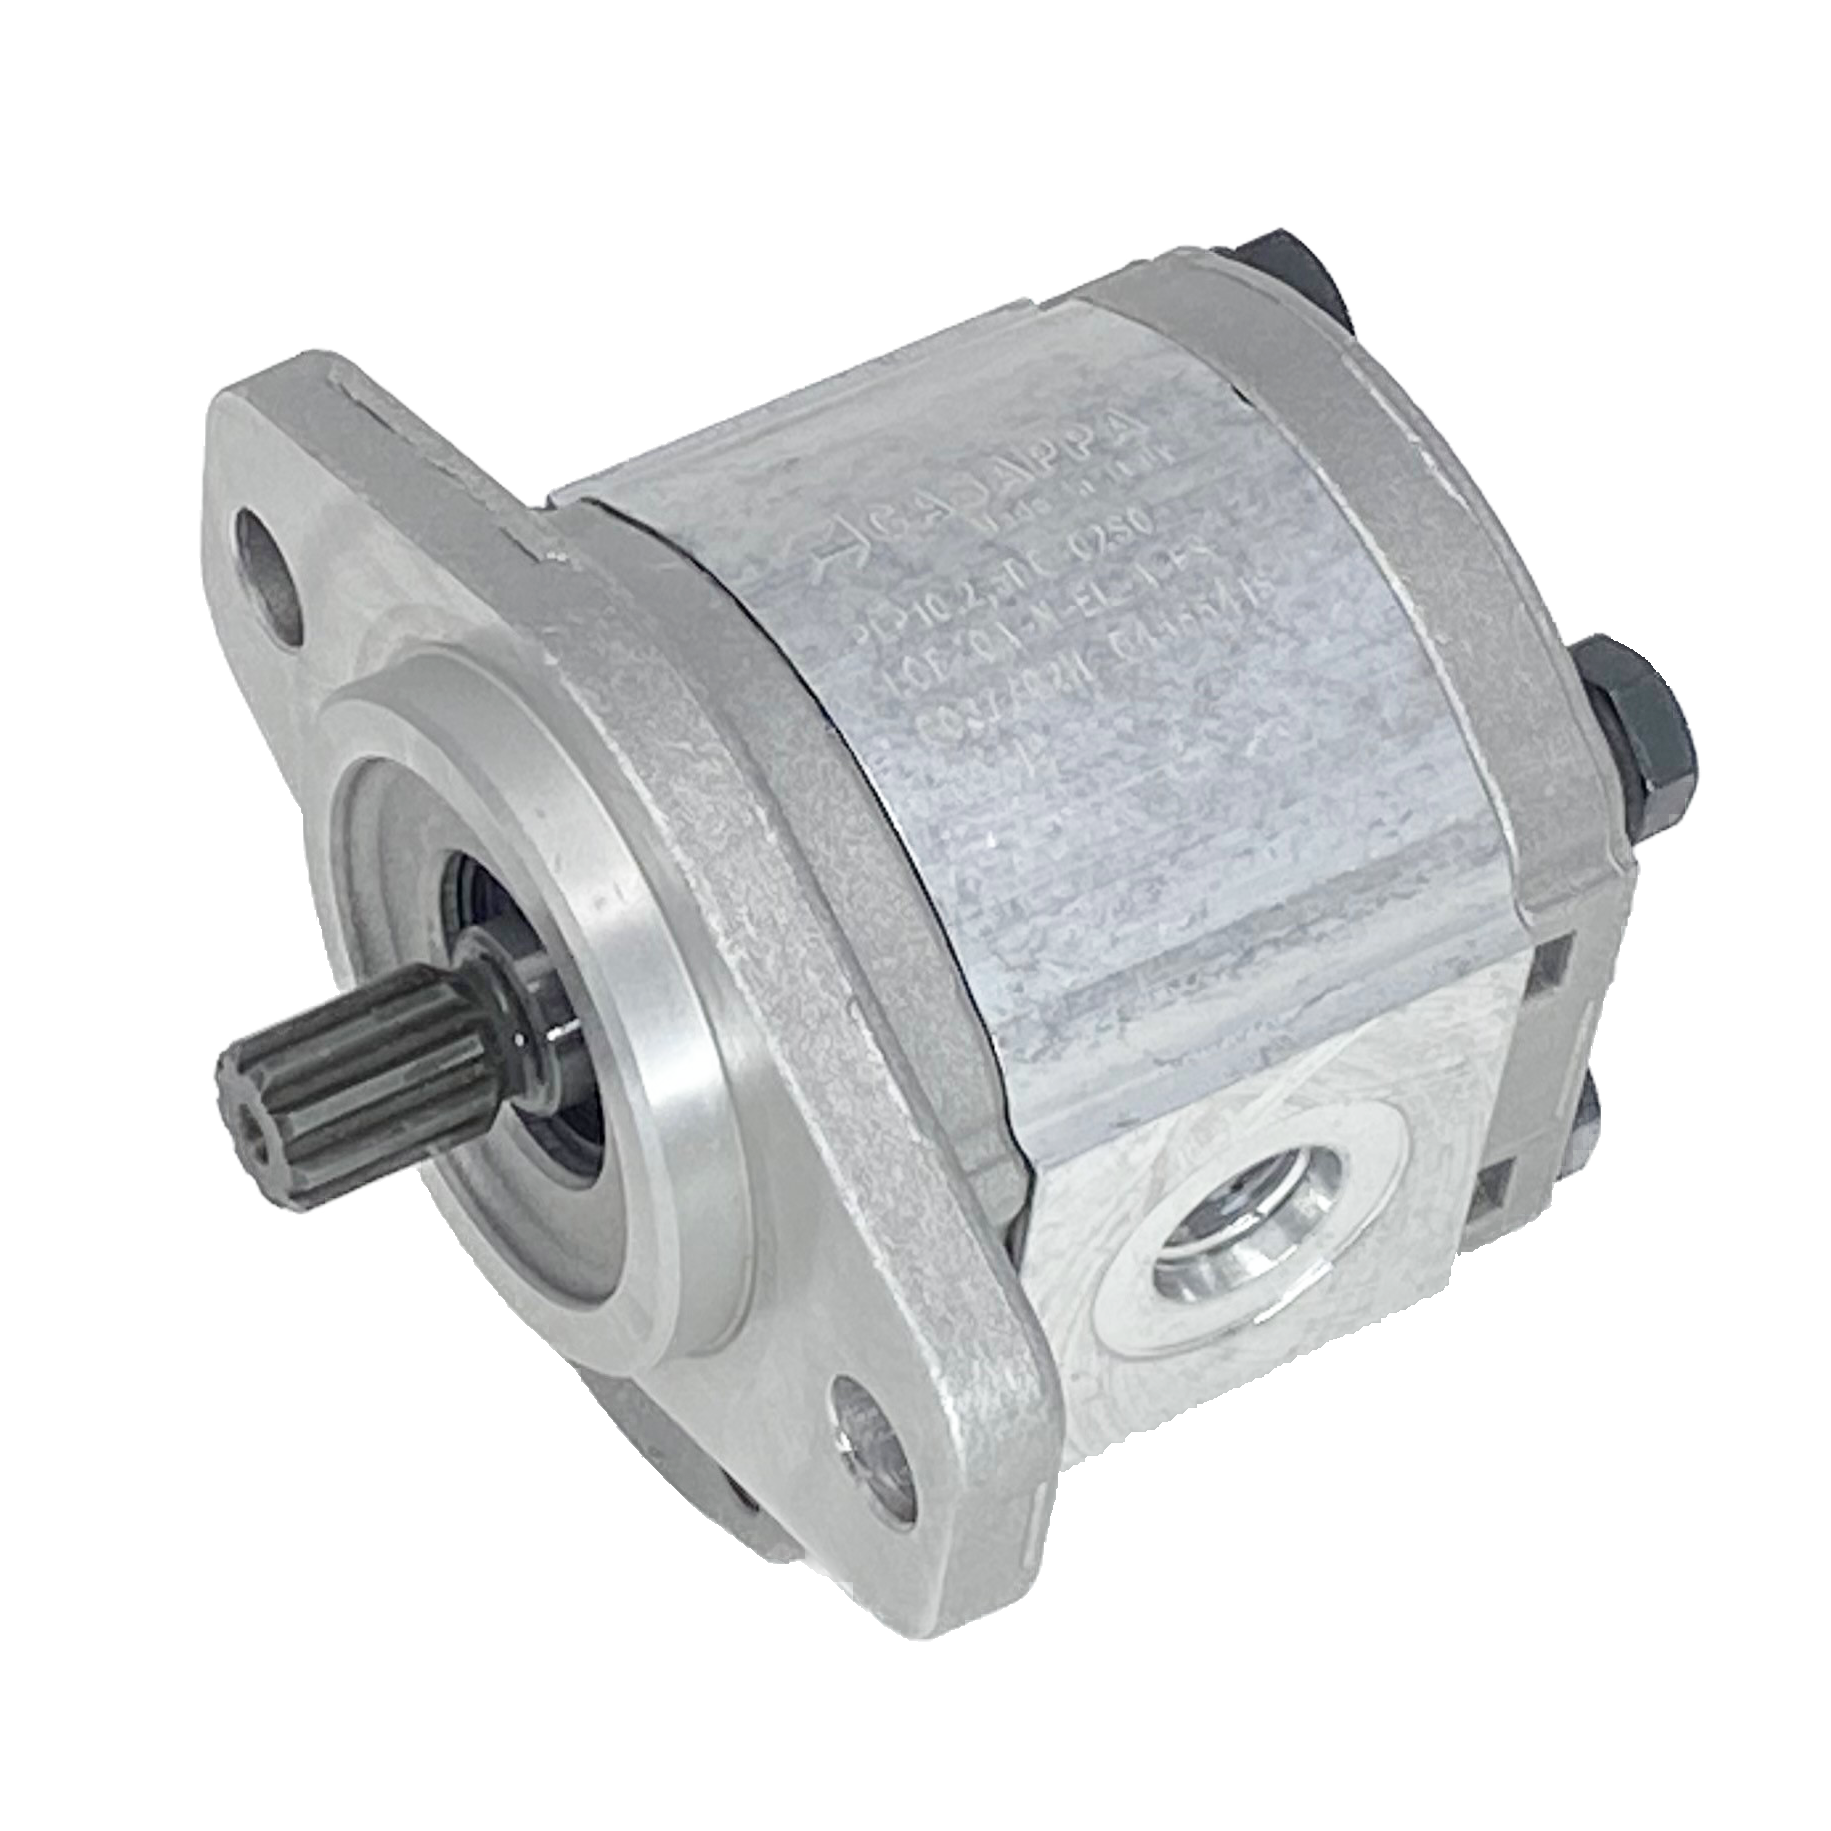 PLP10.2,5S0-02S0-LOB/OA-N-EL : Casappa Polaris Gear Pump, 2.67cc, 3770psi Rated, 4000RPM, CCW, 9T 20/40dp Shaft, SAE AA 2-Bolt Flange, 0.5 (1/2") #8 SAE Inlet, 0.375 (3/8") #6 SAE Outlet, Aluminum Body & Flange